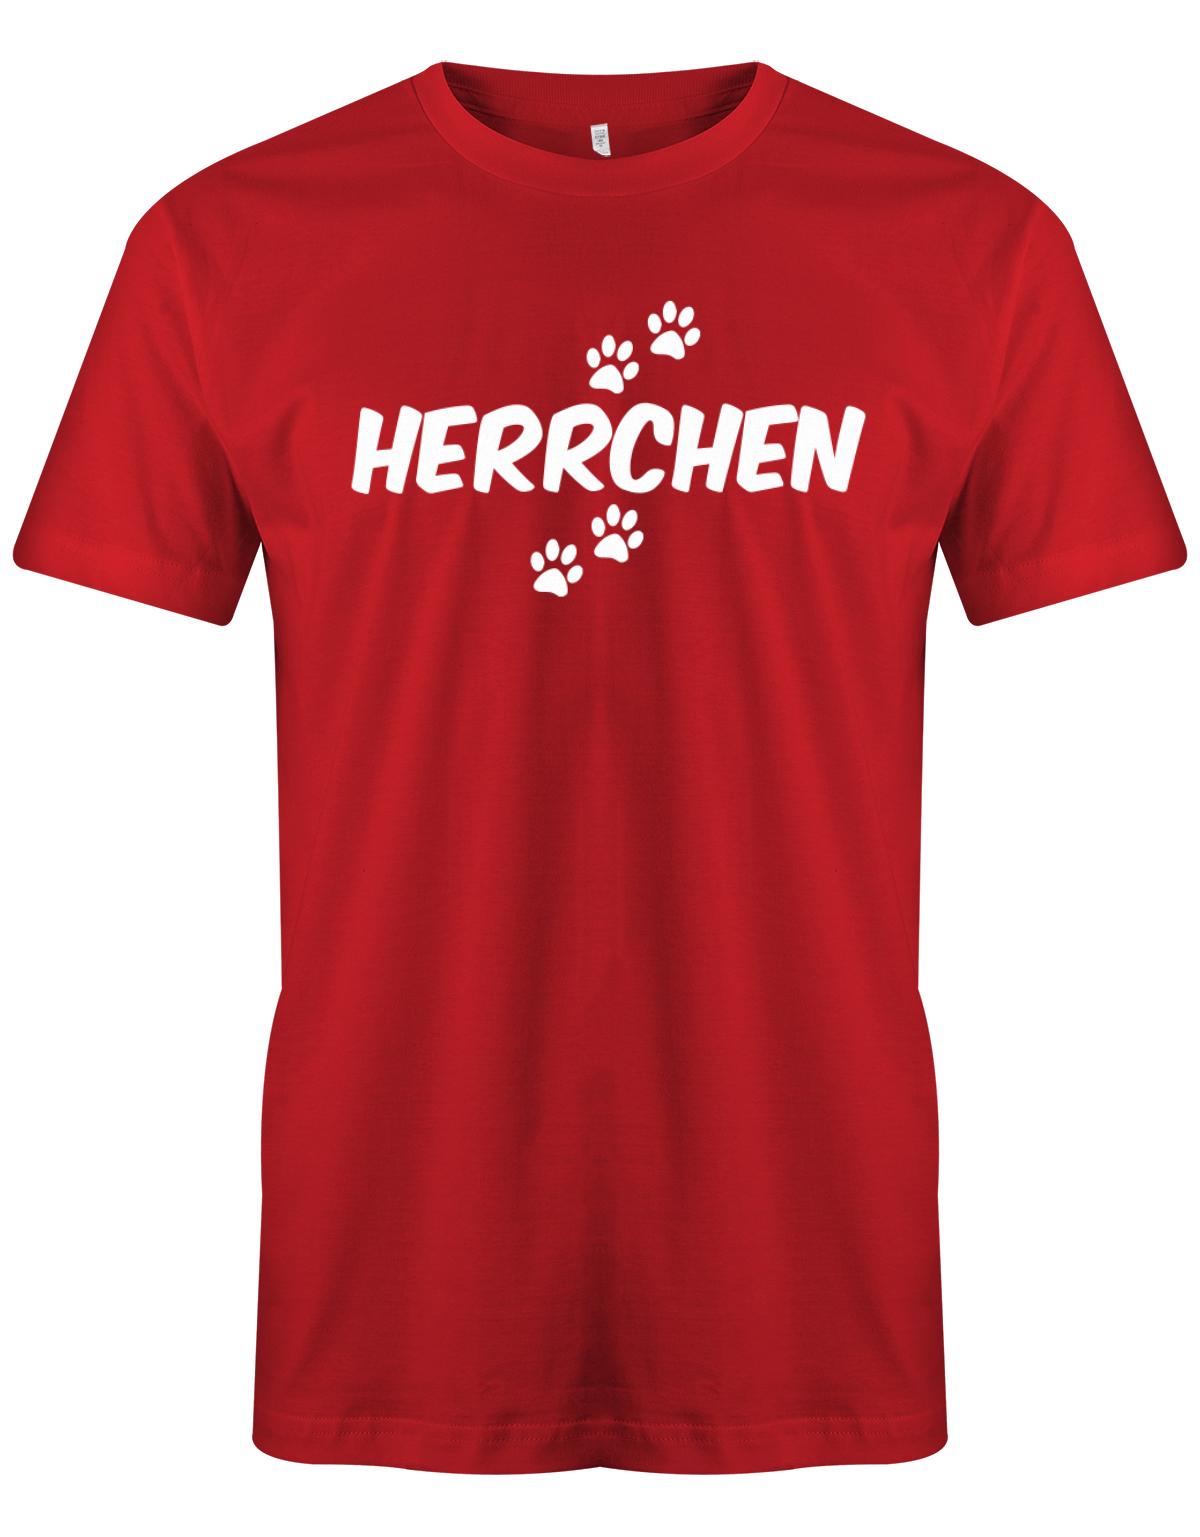 Herrchen-hundebesitzer-Herren-Shirt-Rot